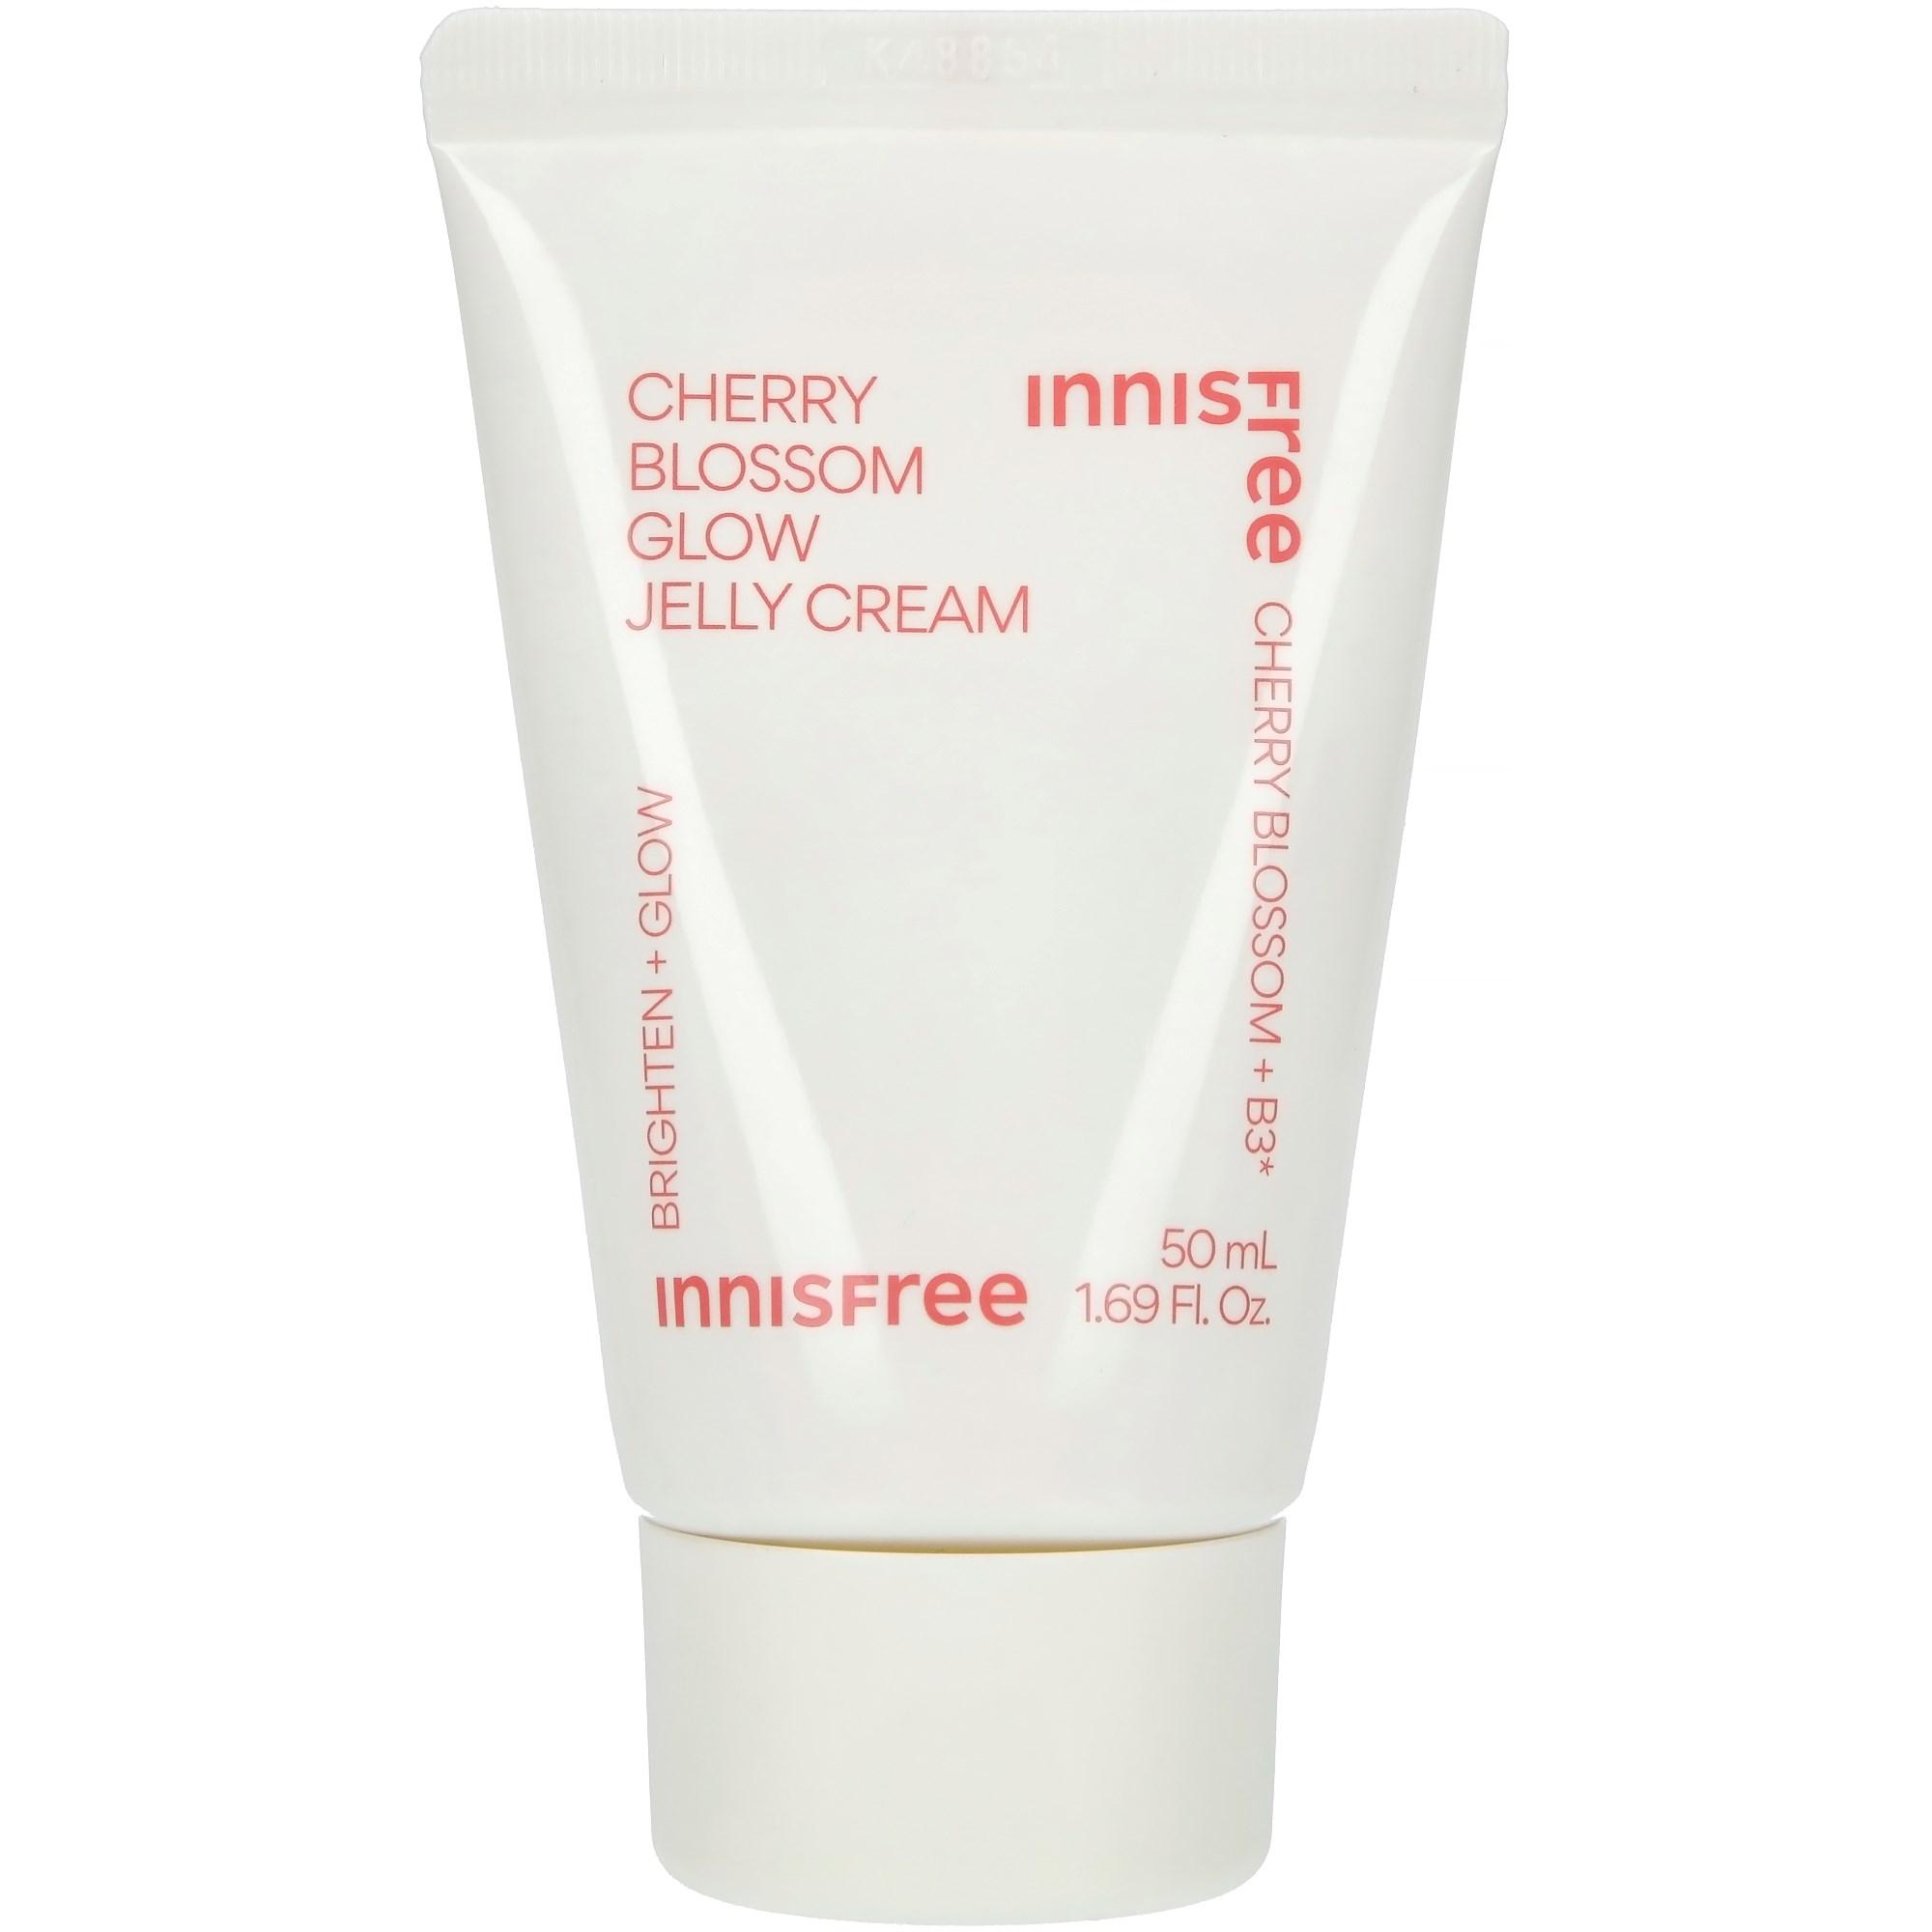 Innisfree Cherry Blossom Glow Jelly Cream 50 ml